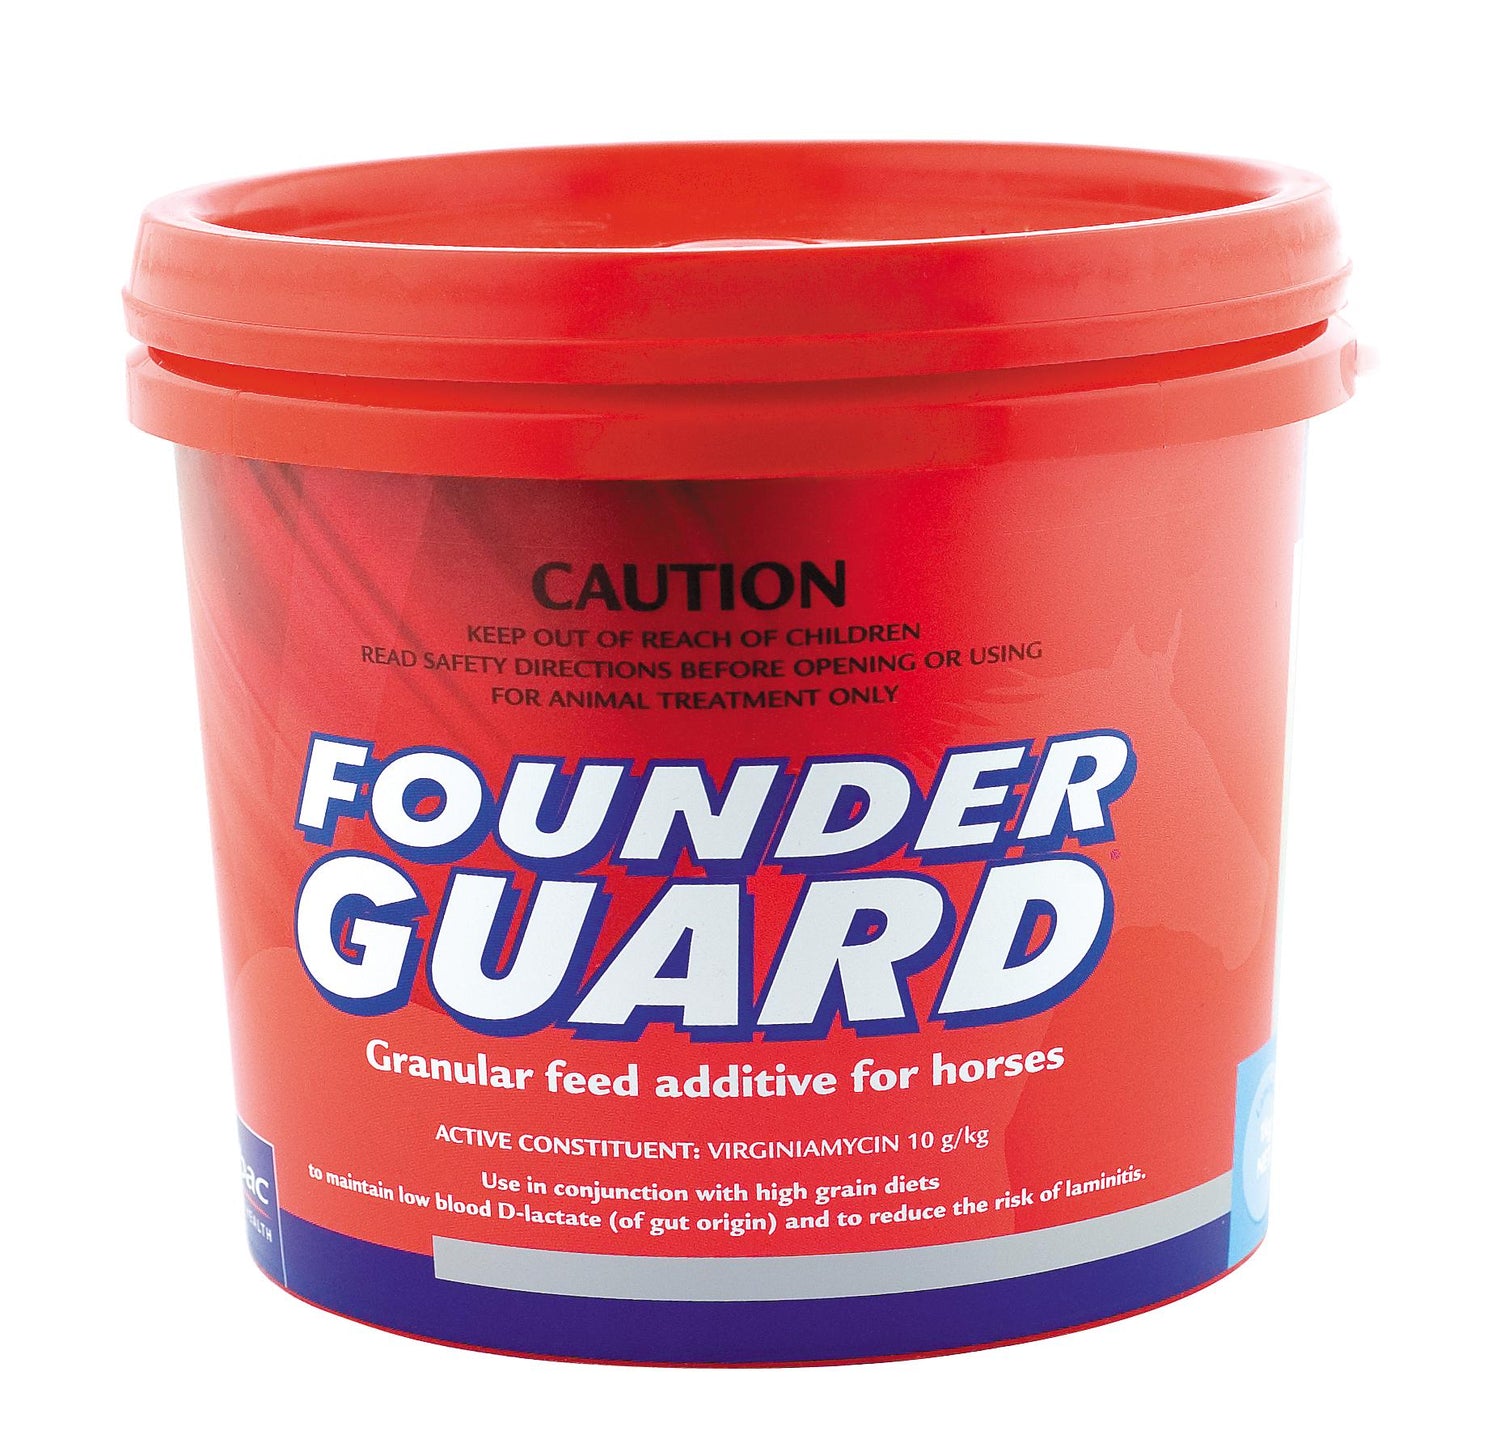 Founder Guard 1kg (Virbac)